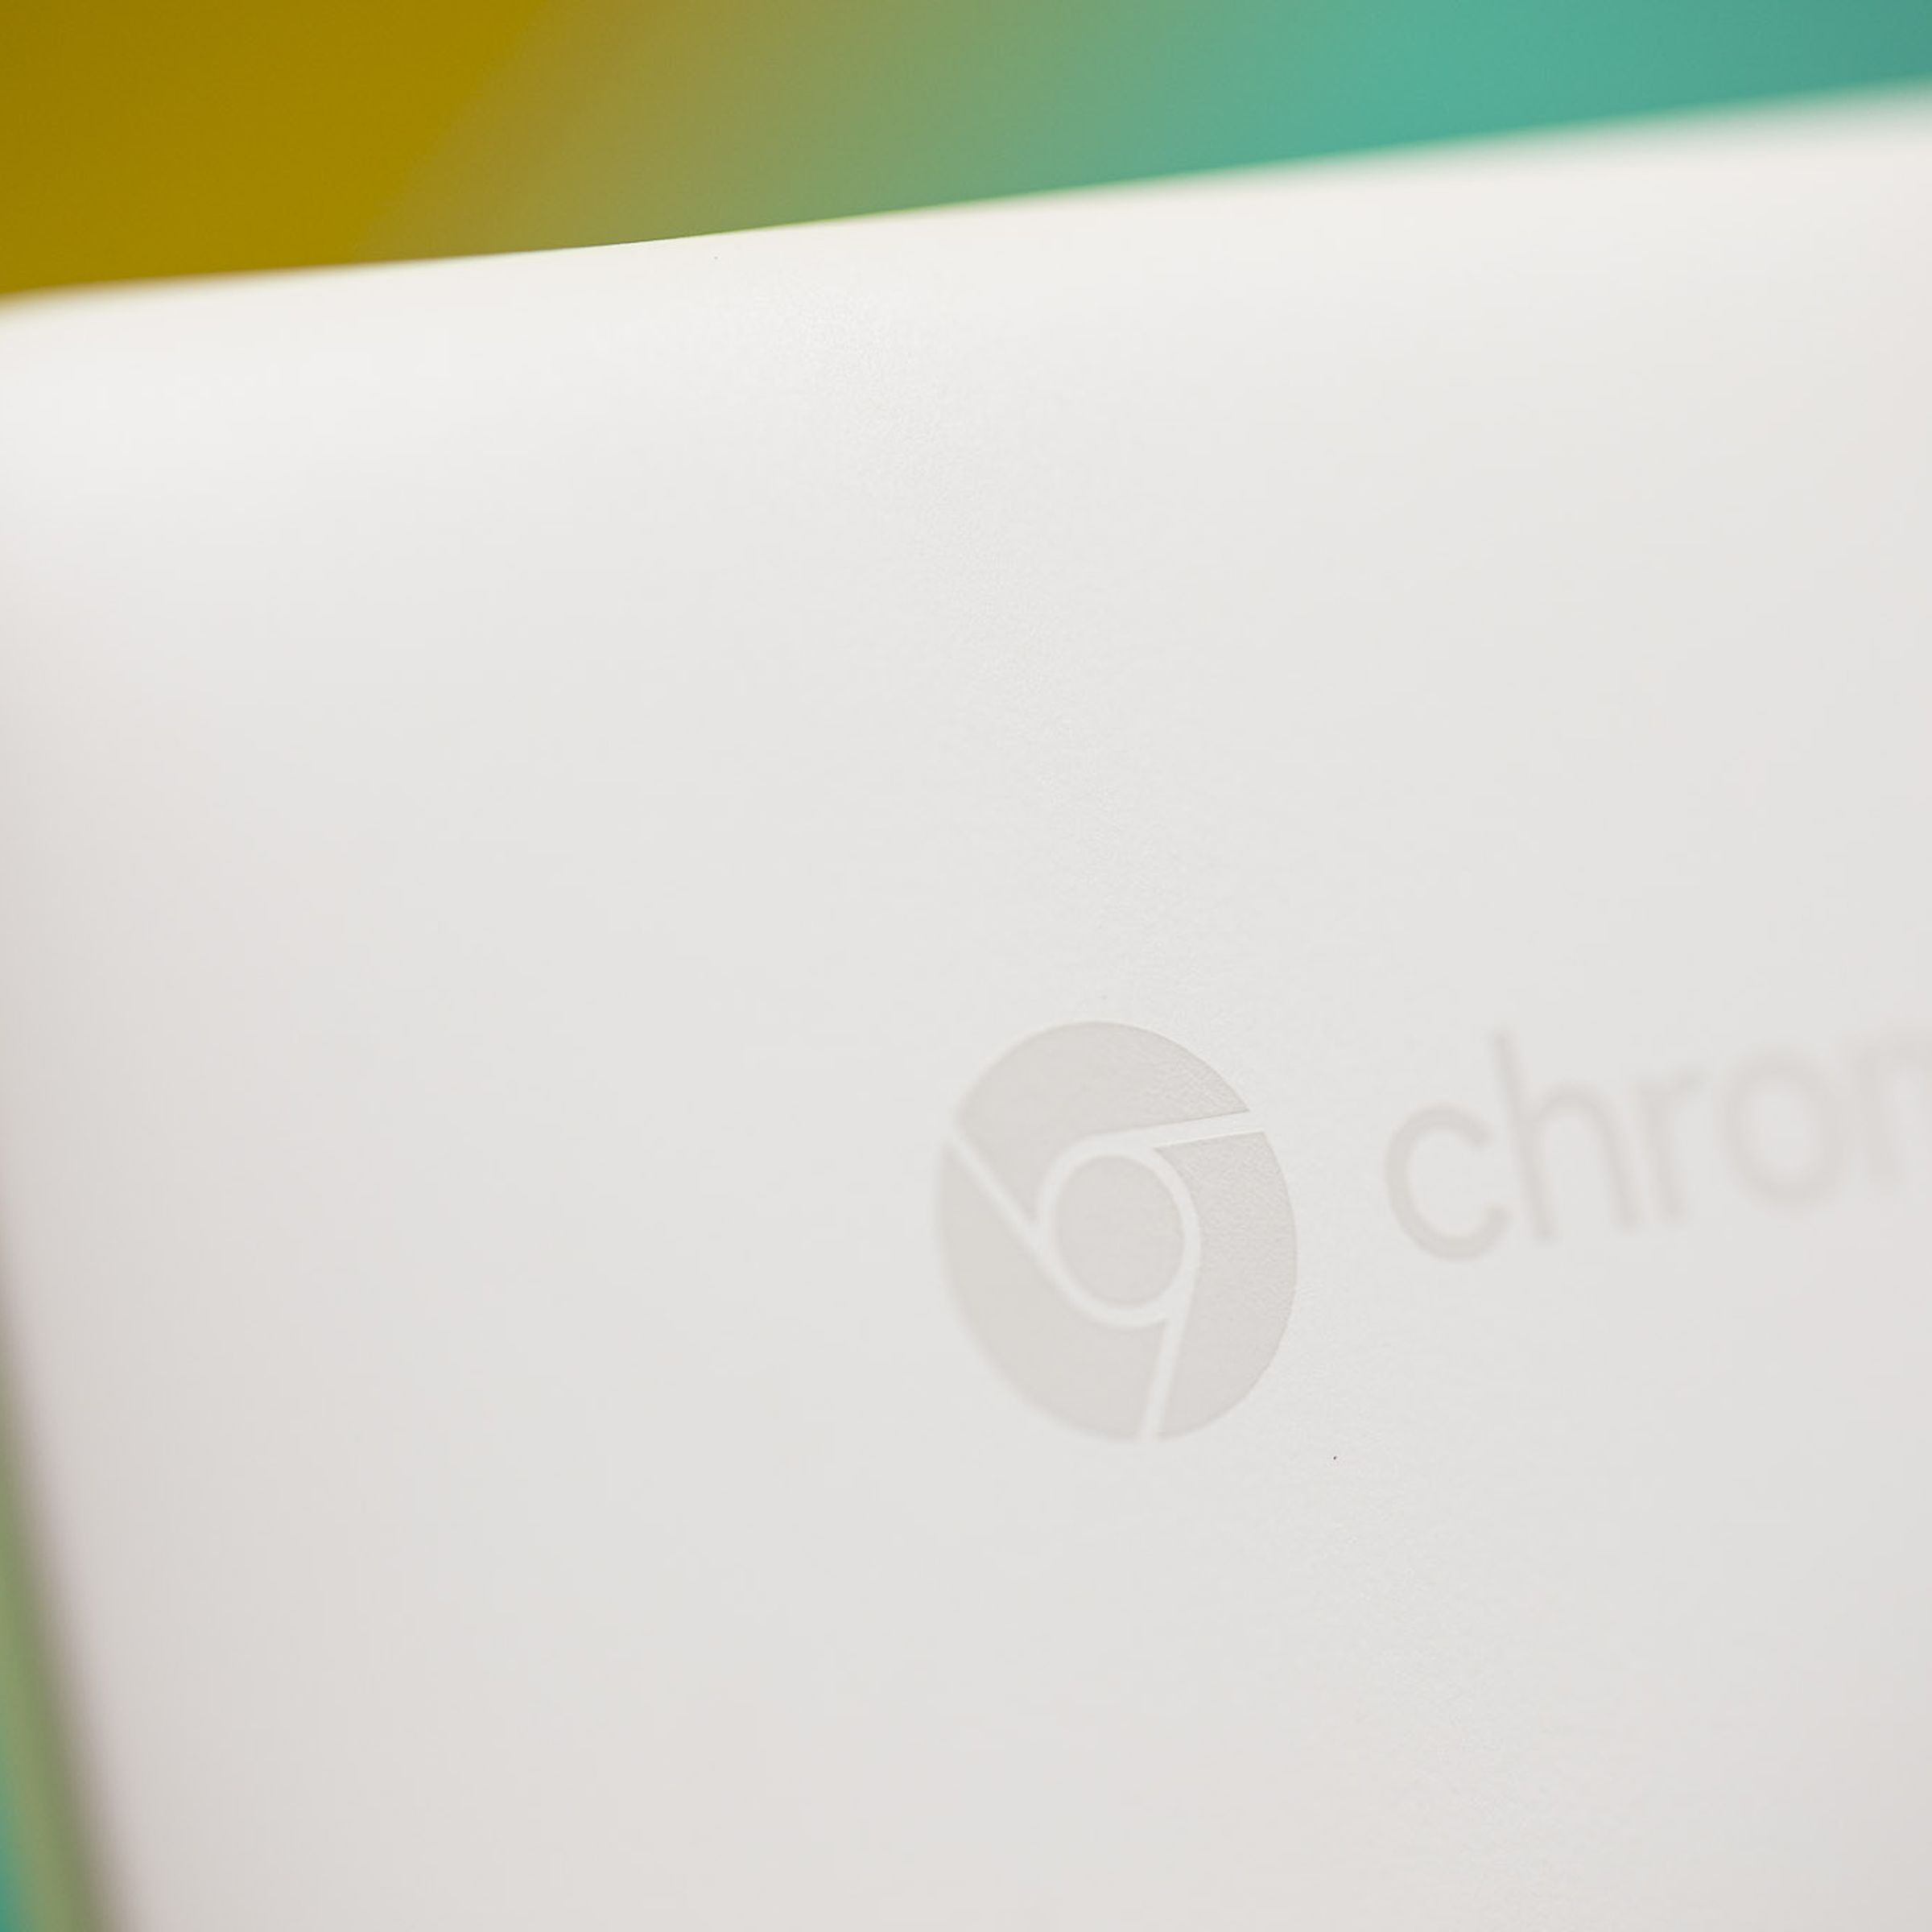 The ChromeOS logo on the HP Dragonfly Pro Chromebook.